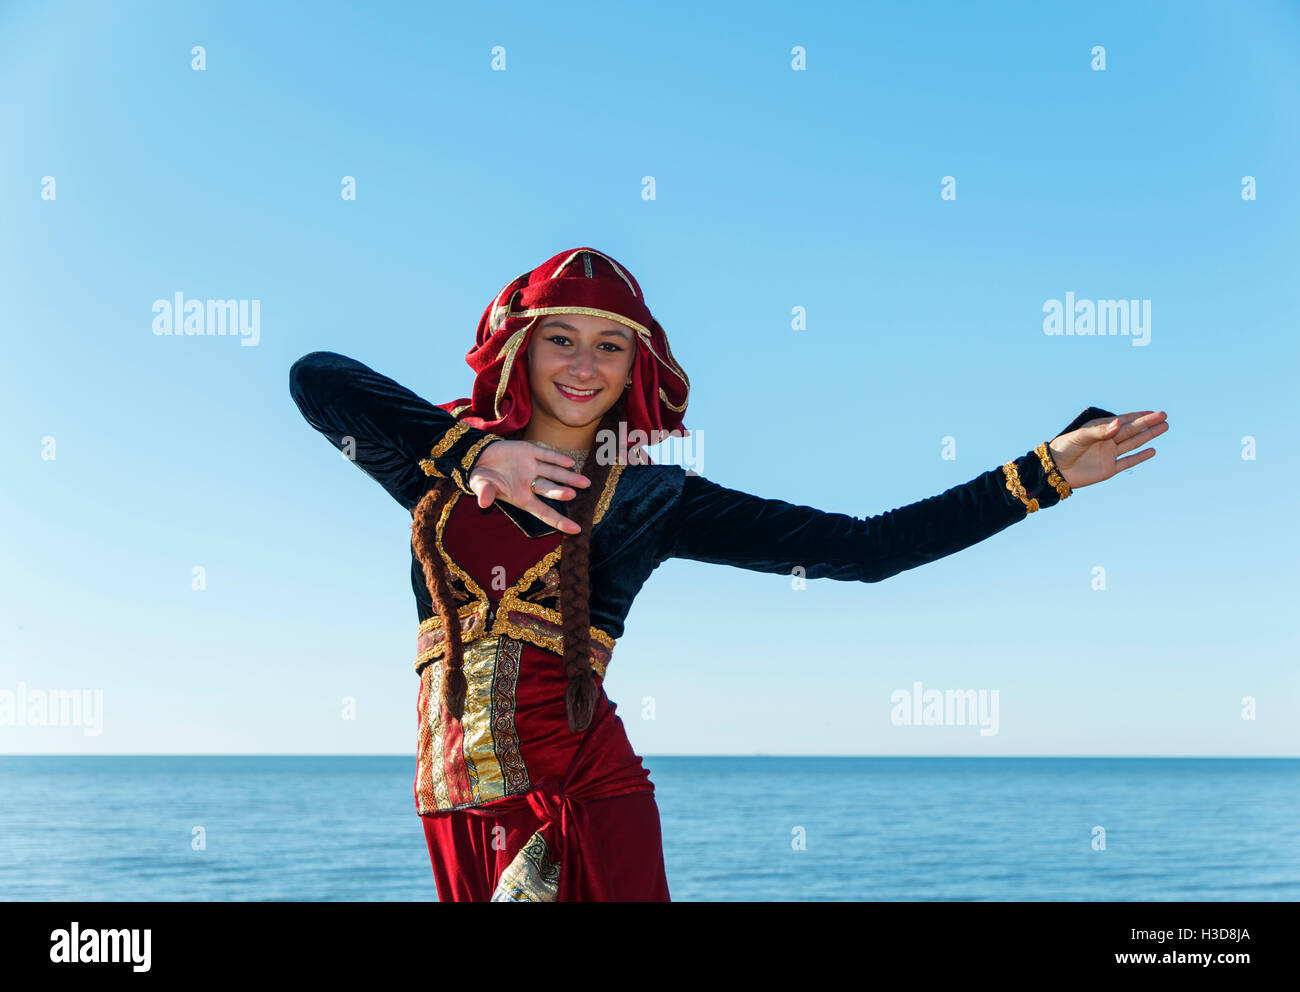 junge Frau tanzen georgische nationale Kleidung Meer Natur Sommer sonnig Stockfoto